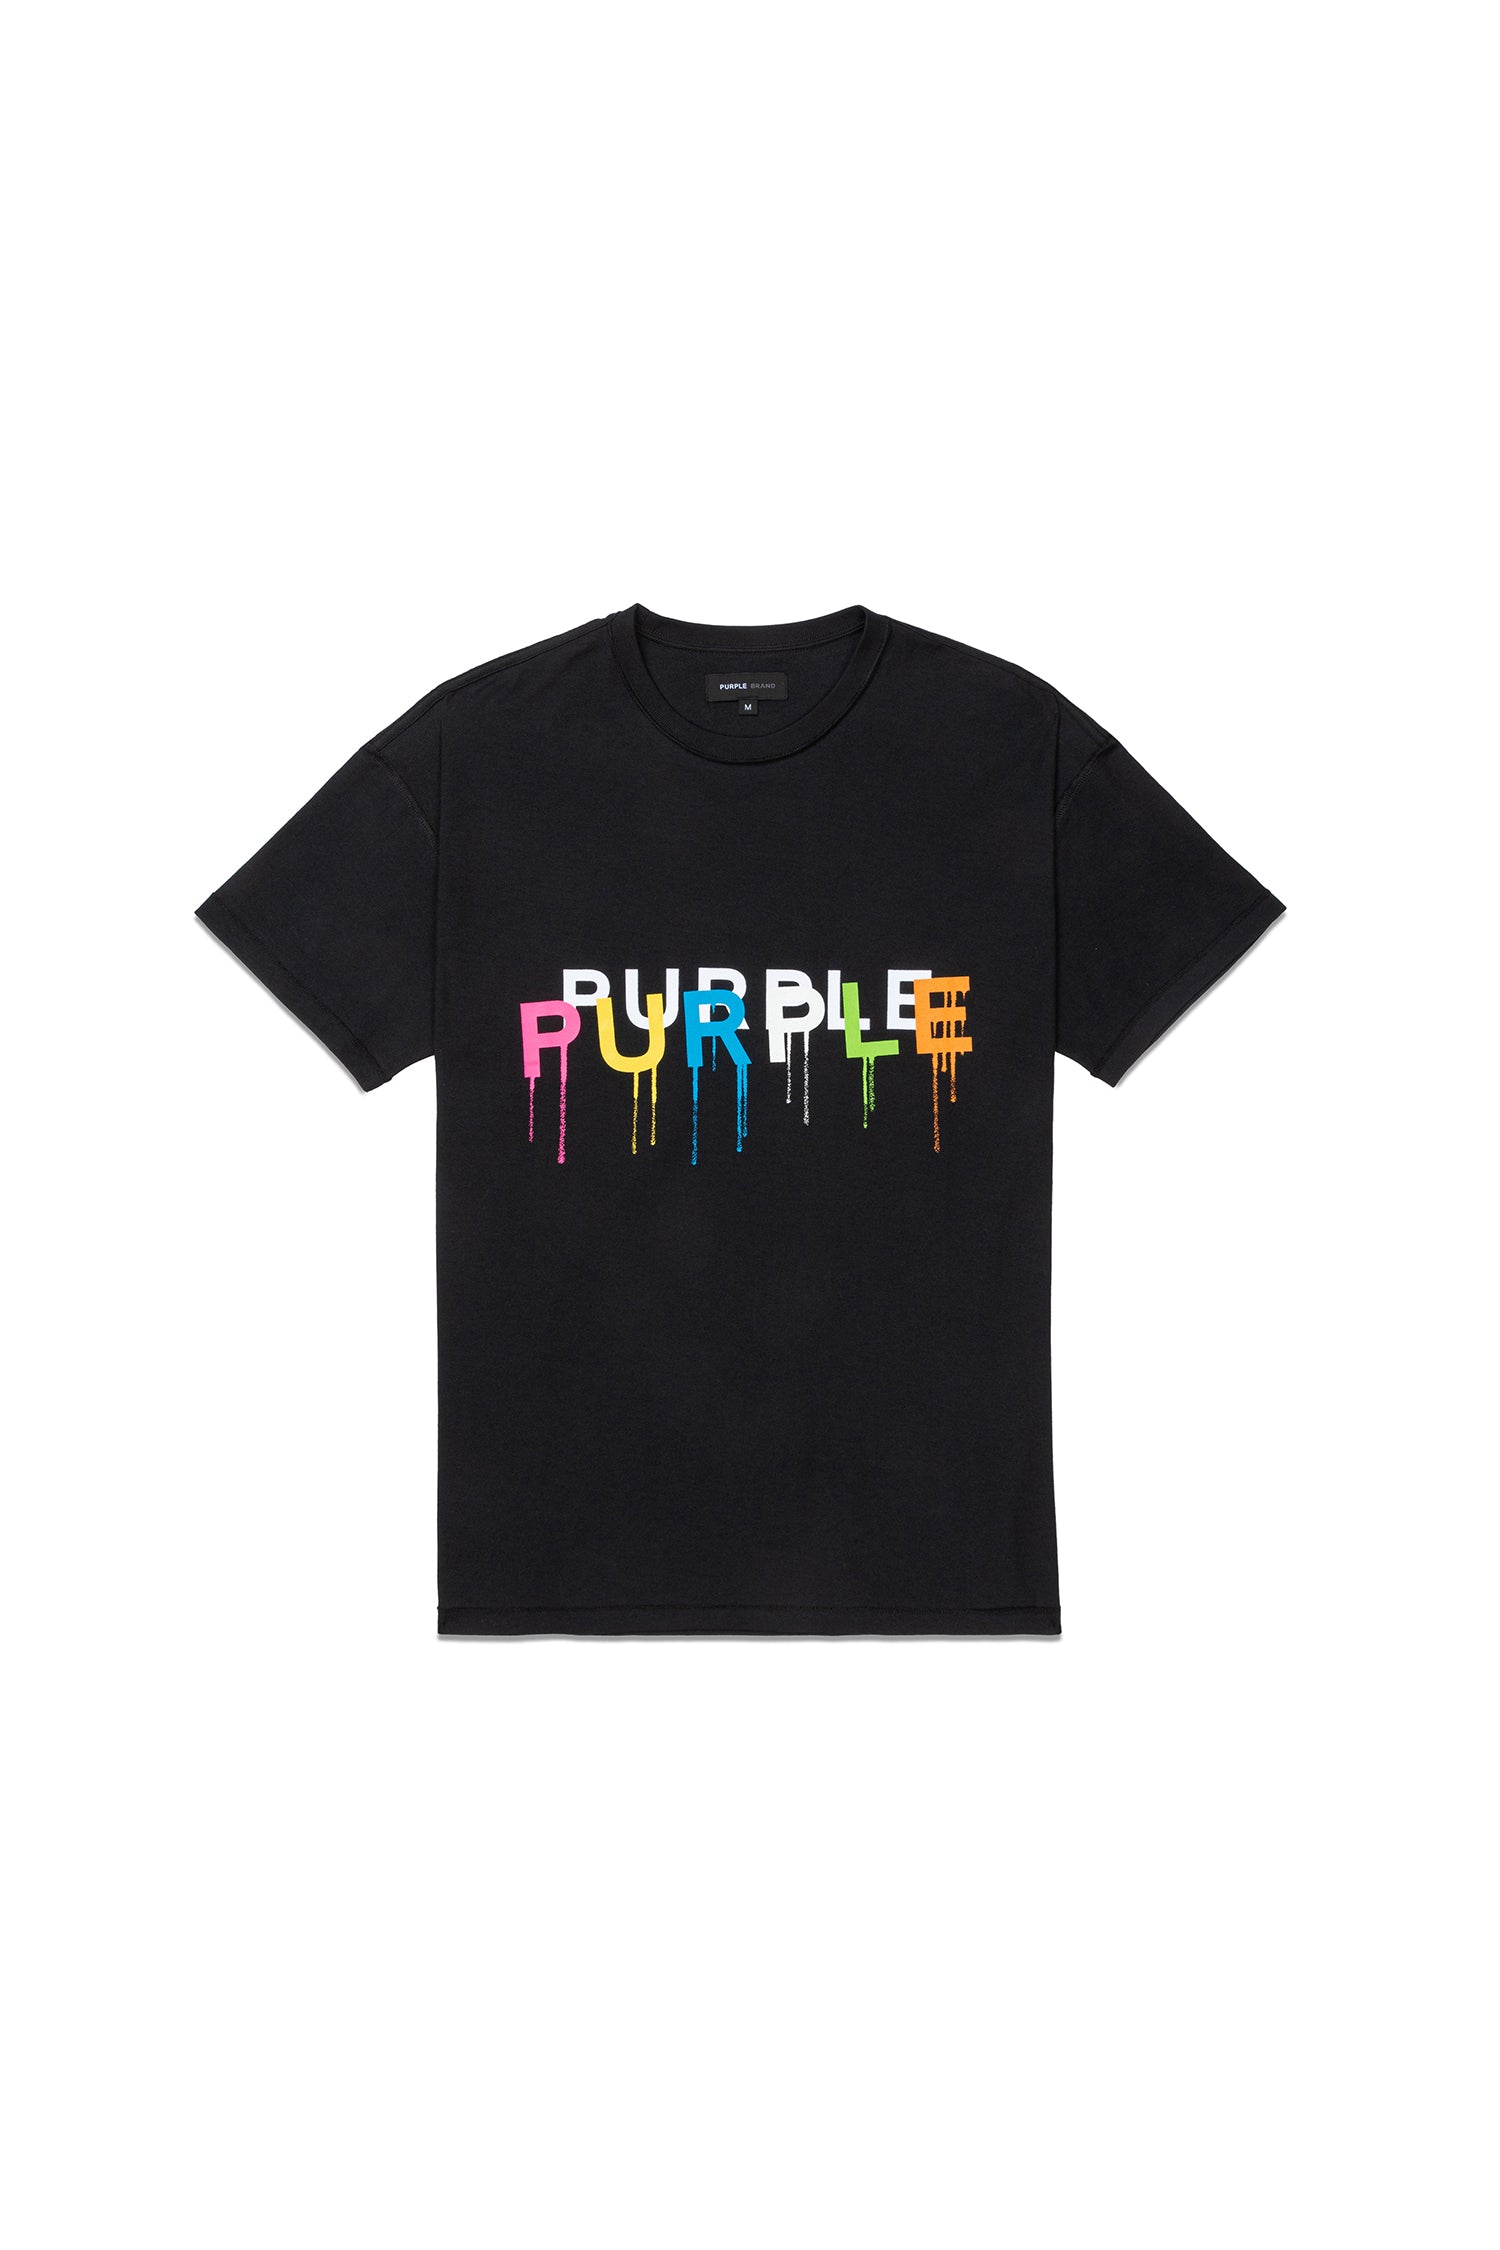 Purple Brand Painted Wordmark T-Shirt